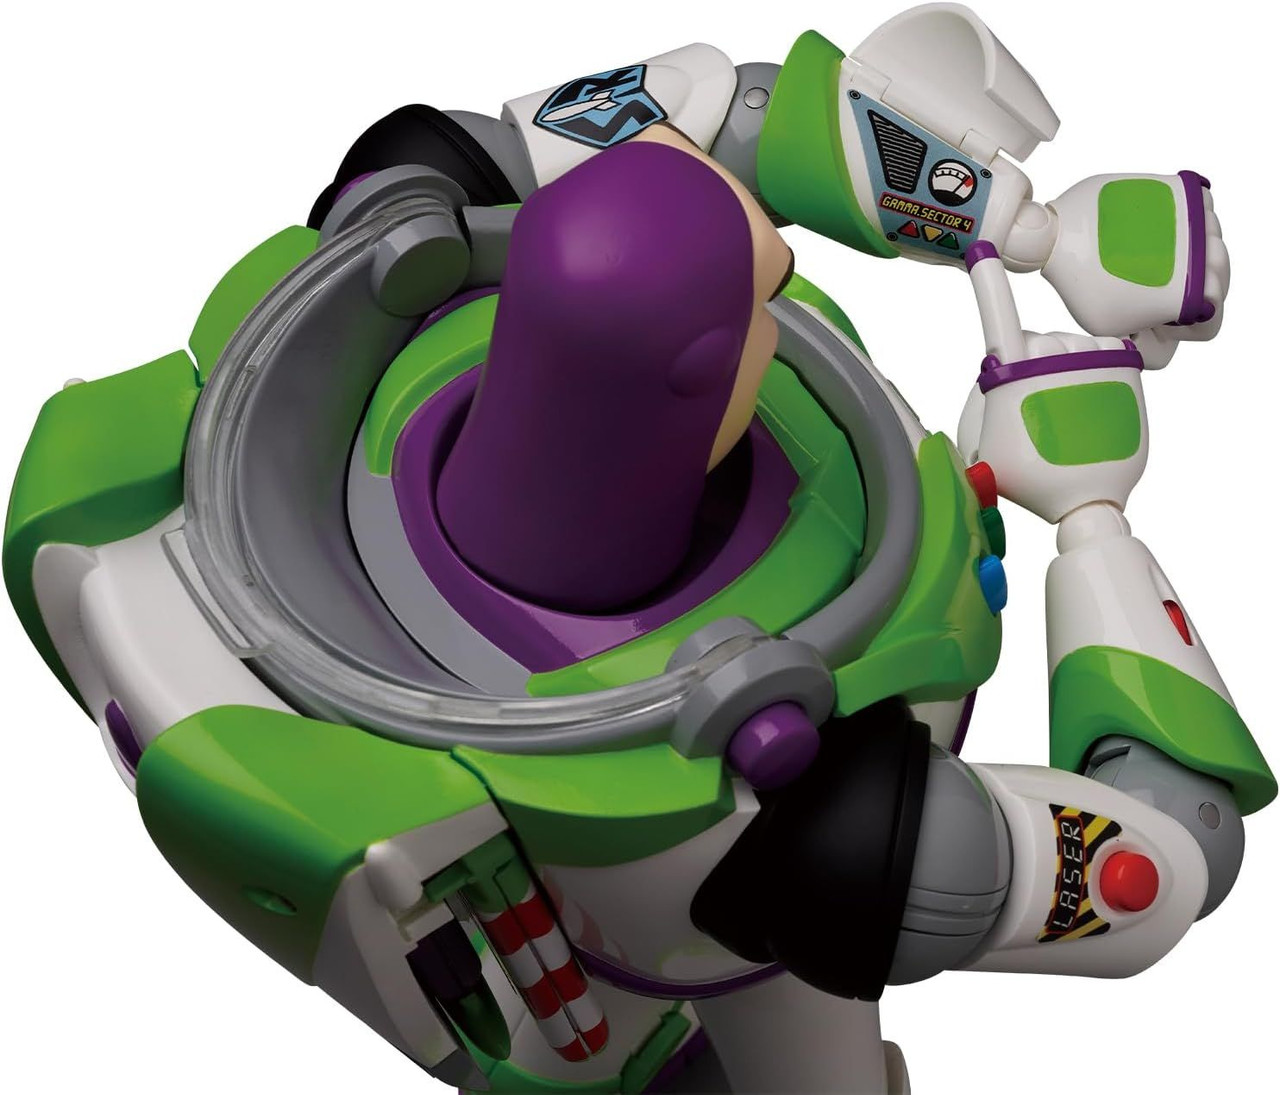 Medicom Ultimate Buzz Lightyear Figure (Toy Story)